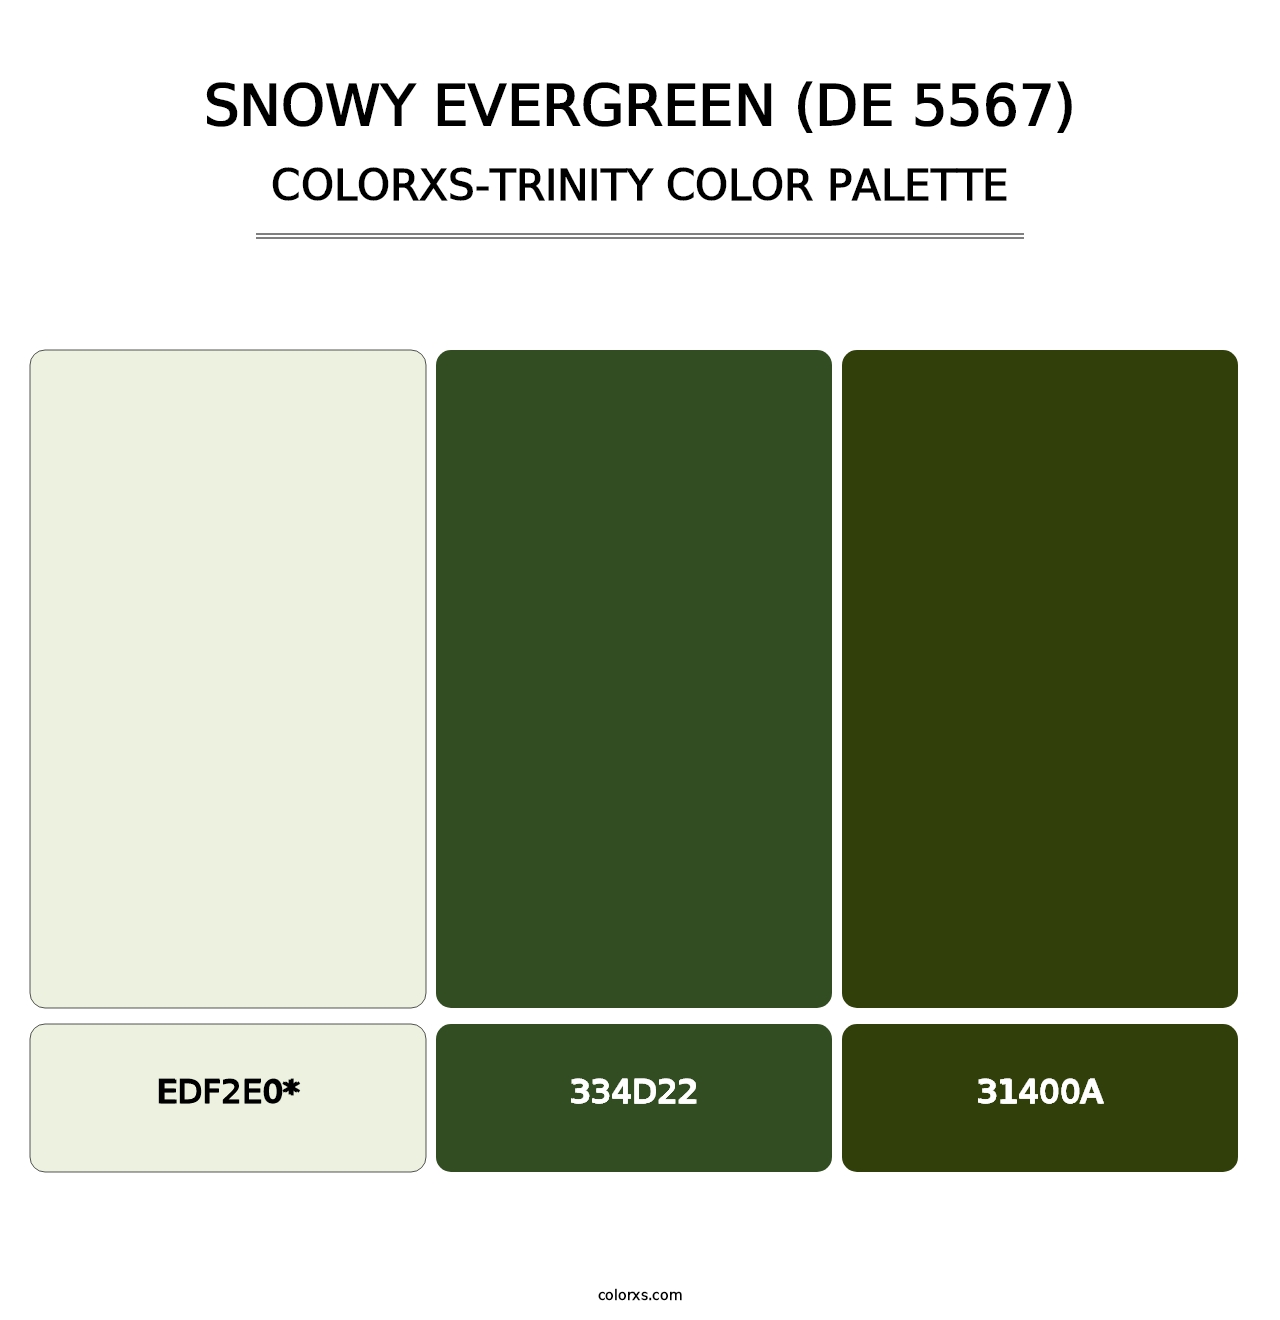 Snowy Evergreen (DE 5567) - Colorxs Trinity Palette